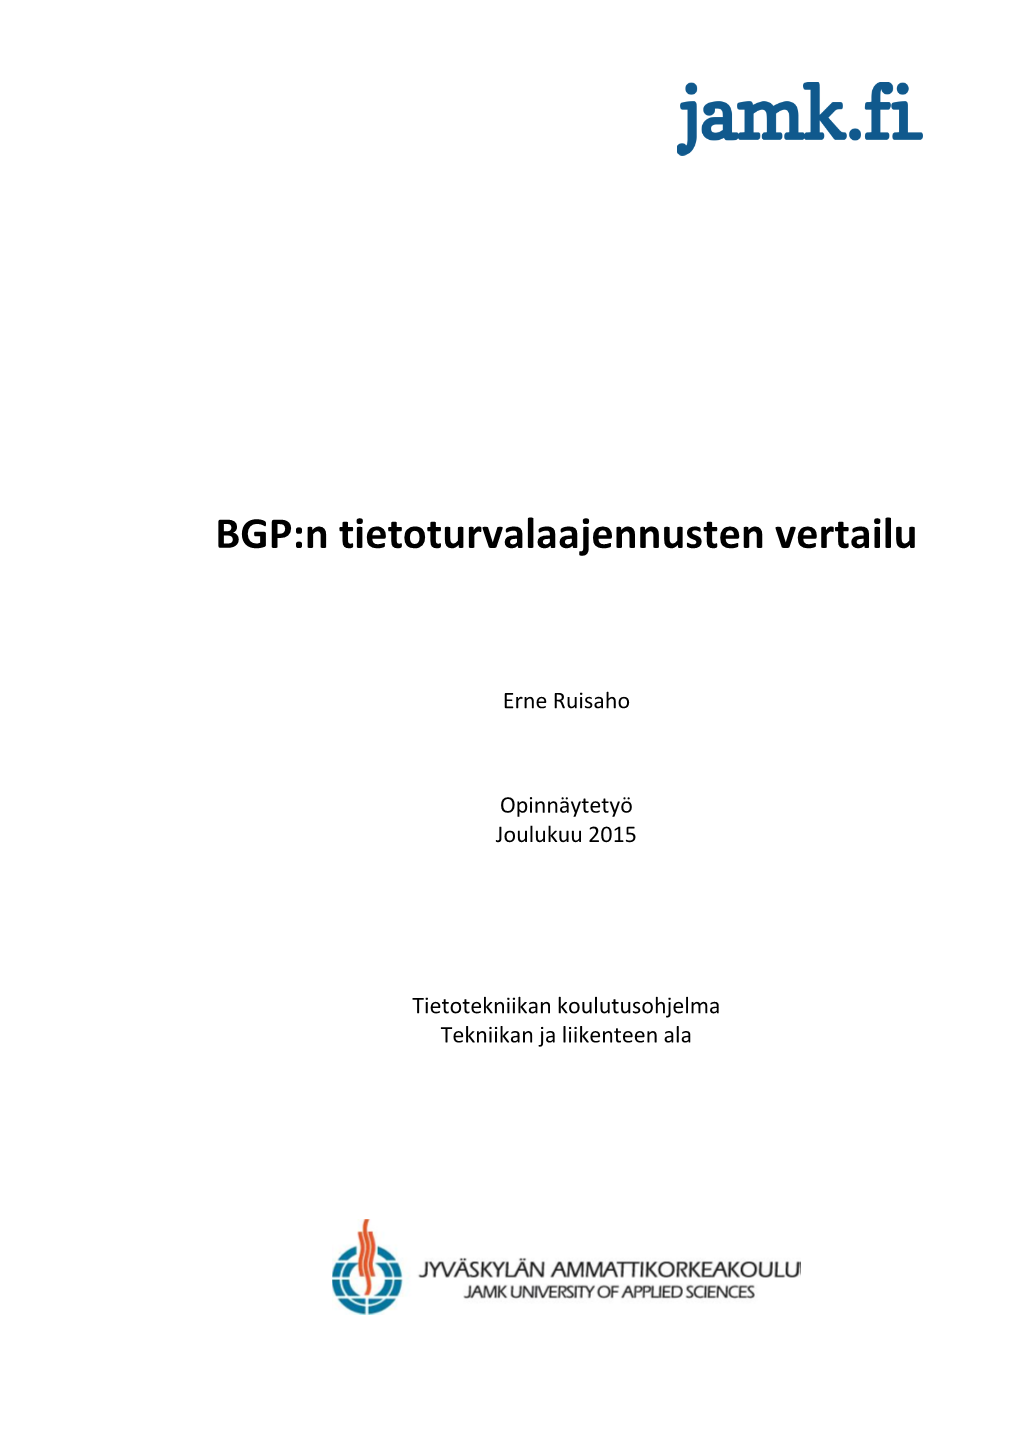 BGP:N Tietoturvalaajennusten Vertailu